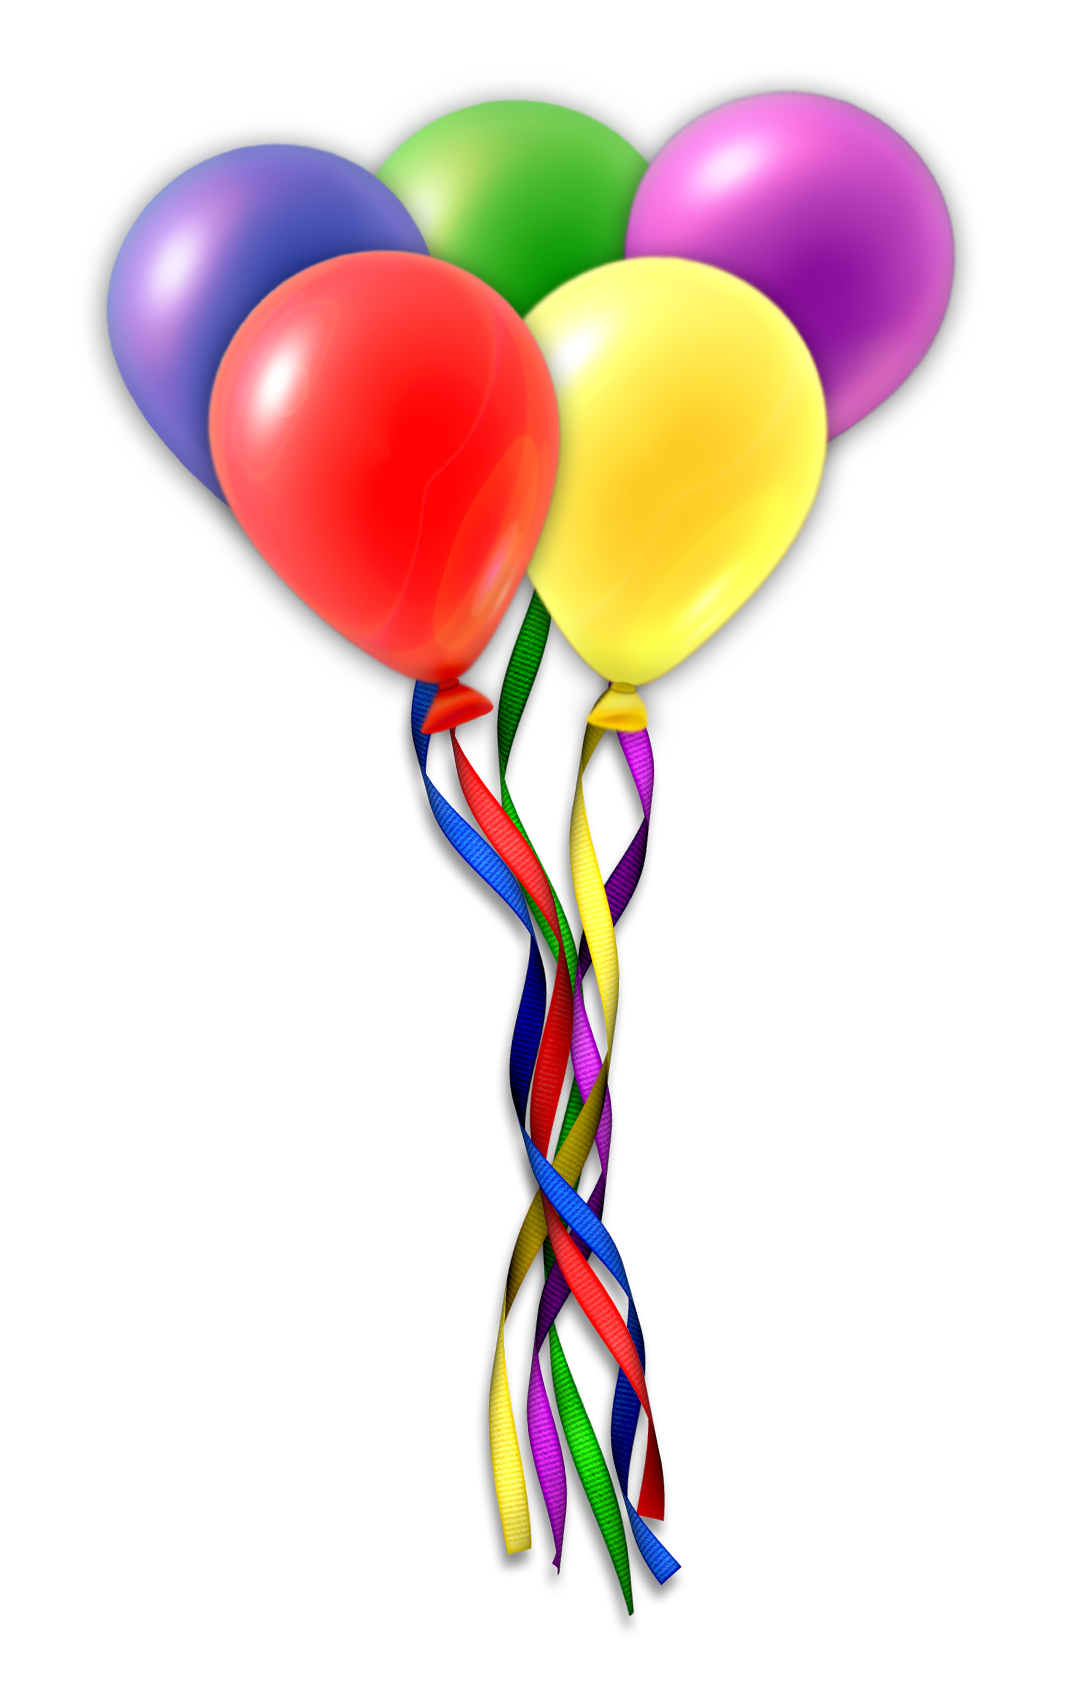 Download Balloons Transparent Background HQ PNG Image | FreePNGImg